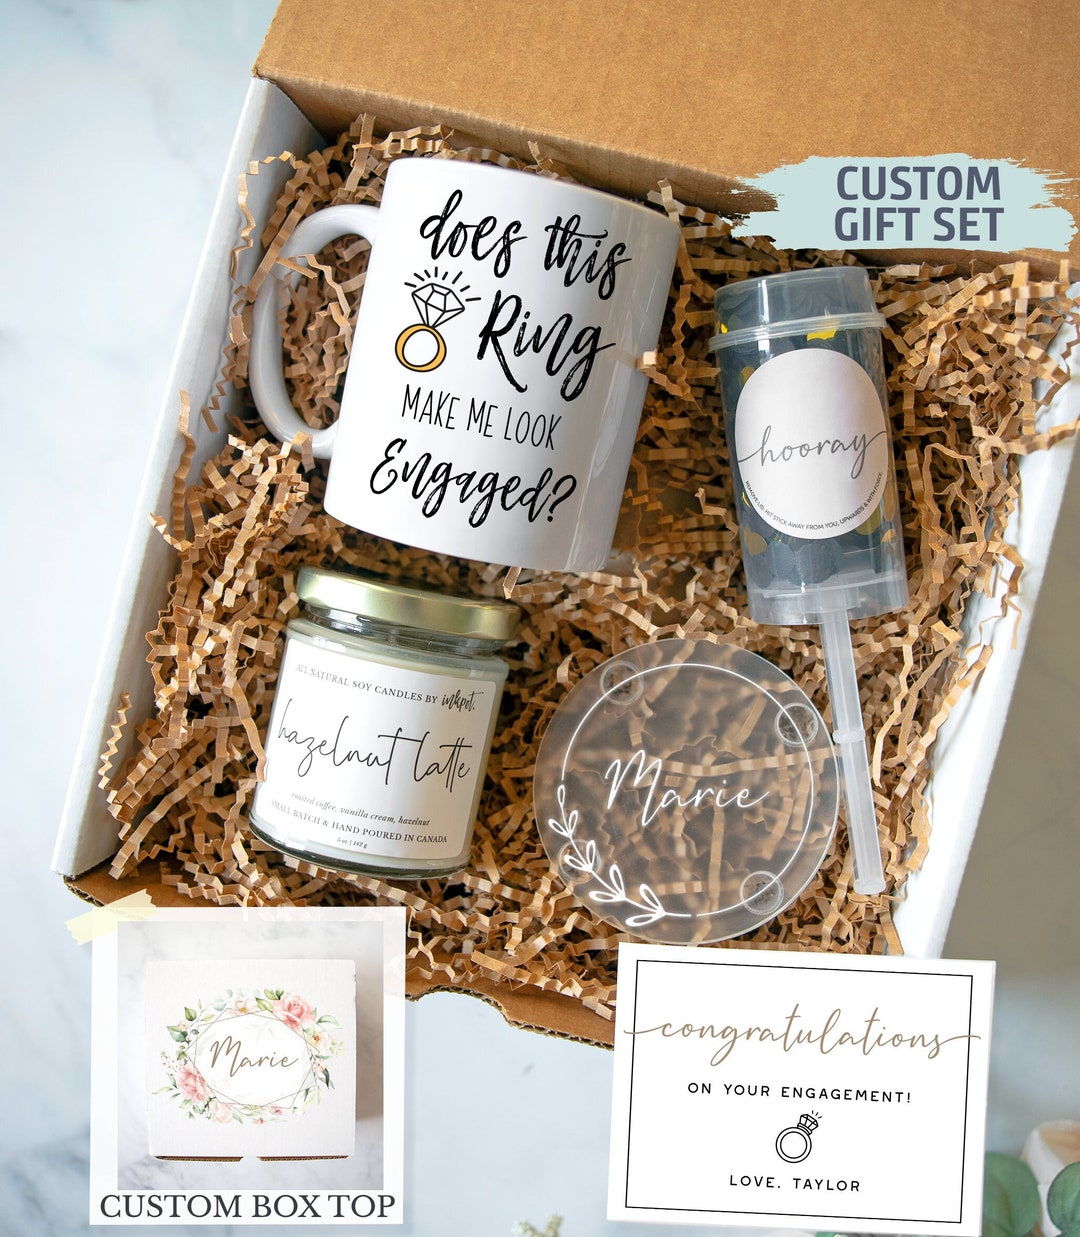 Personalized Bridal Emergency Kit - Bride Gift - Personalized Gift - W –  Craftingisadreamjob